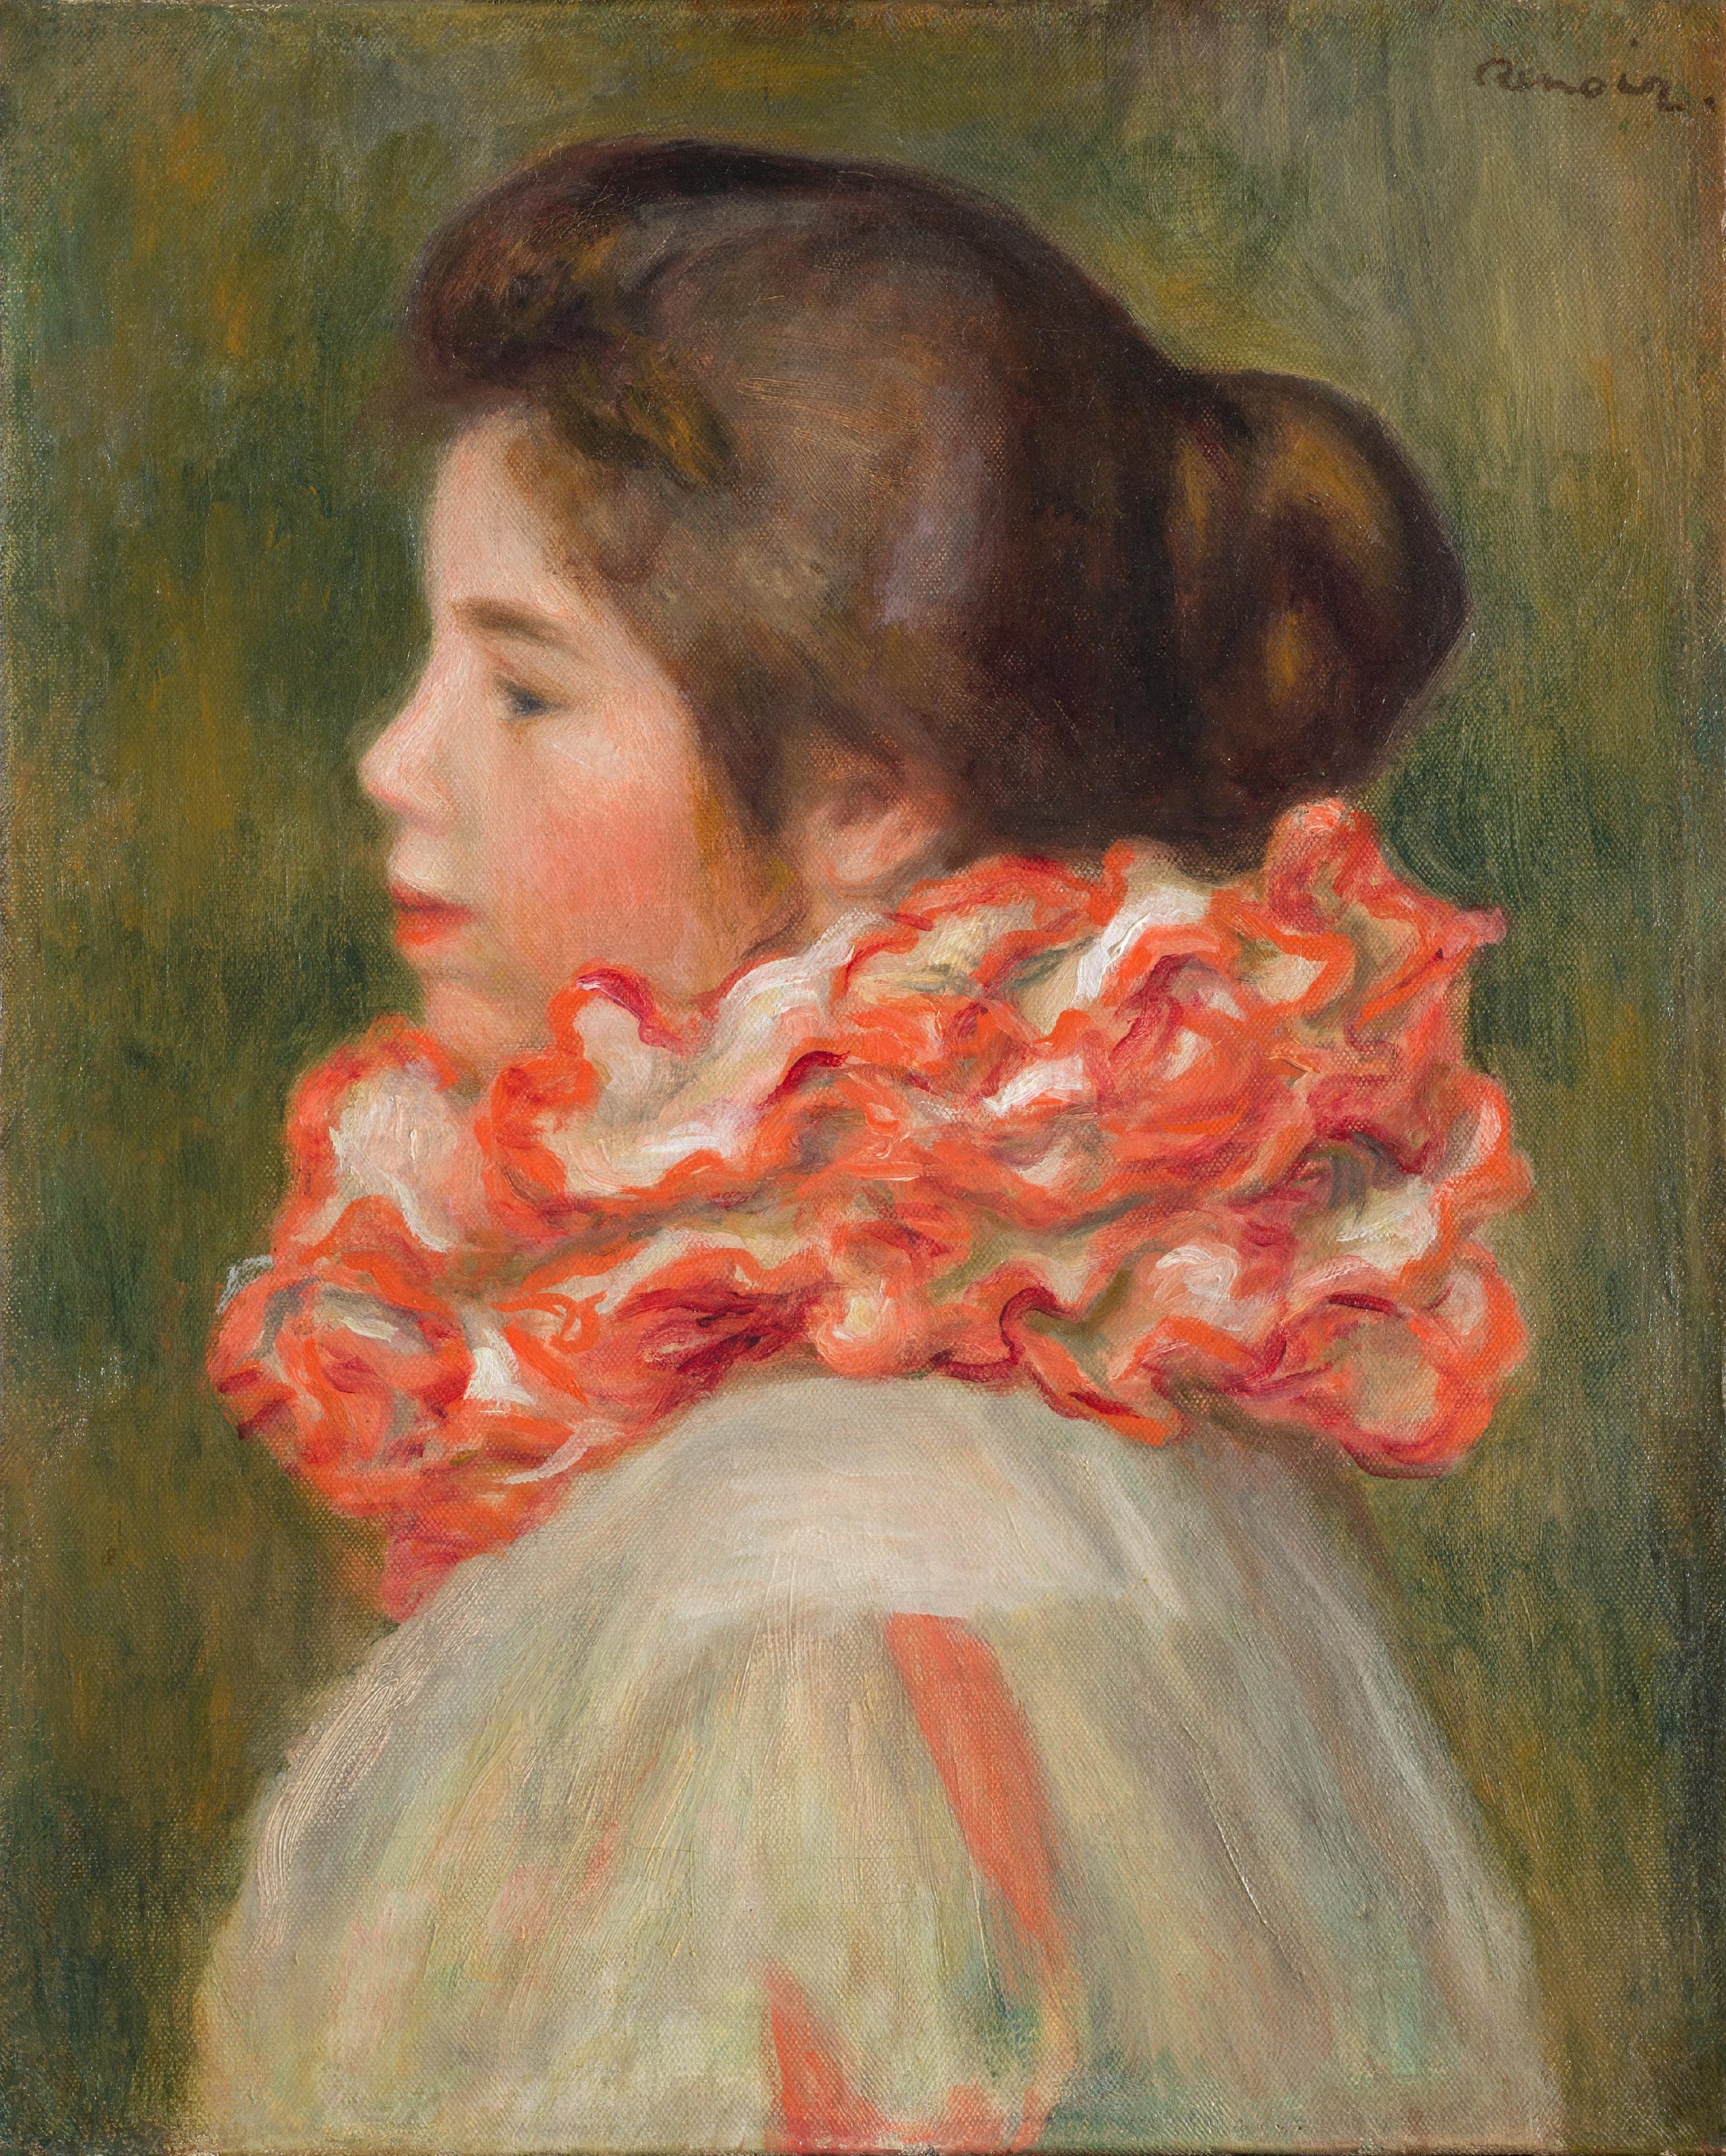 Ragazza con gorgiera rossa by Pierre-Auguste Renoir - 1896 circa - 41,3 x 33,3 cm 